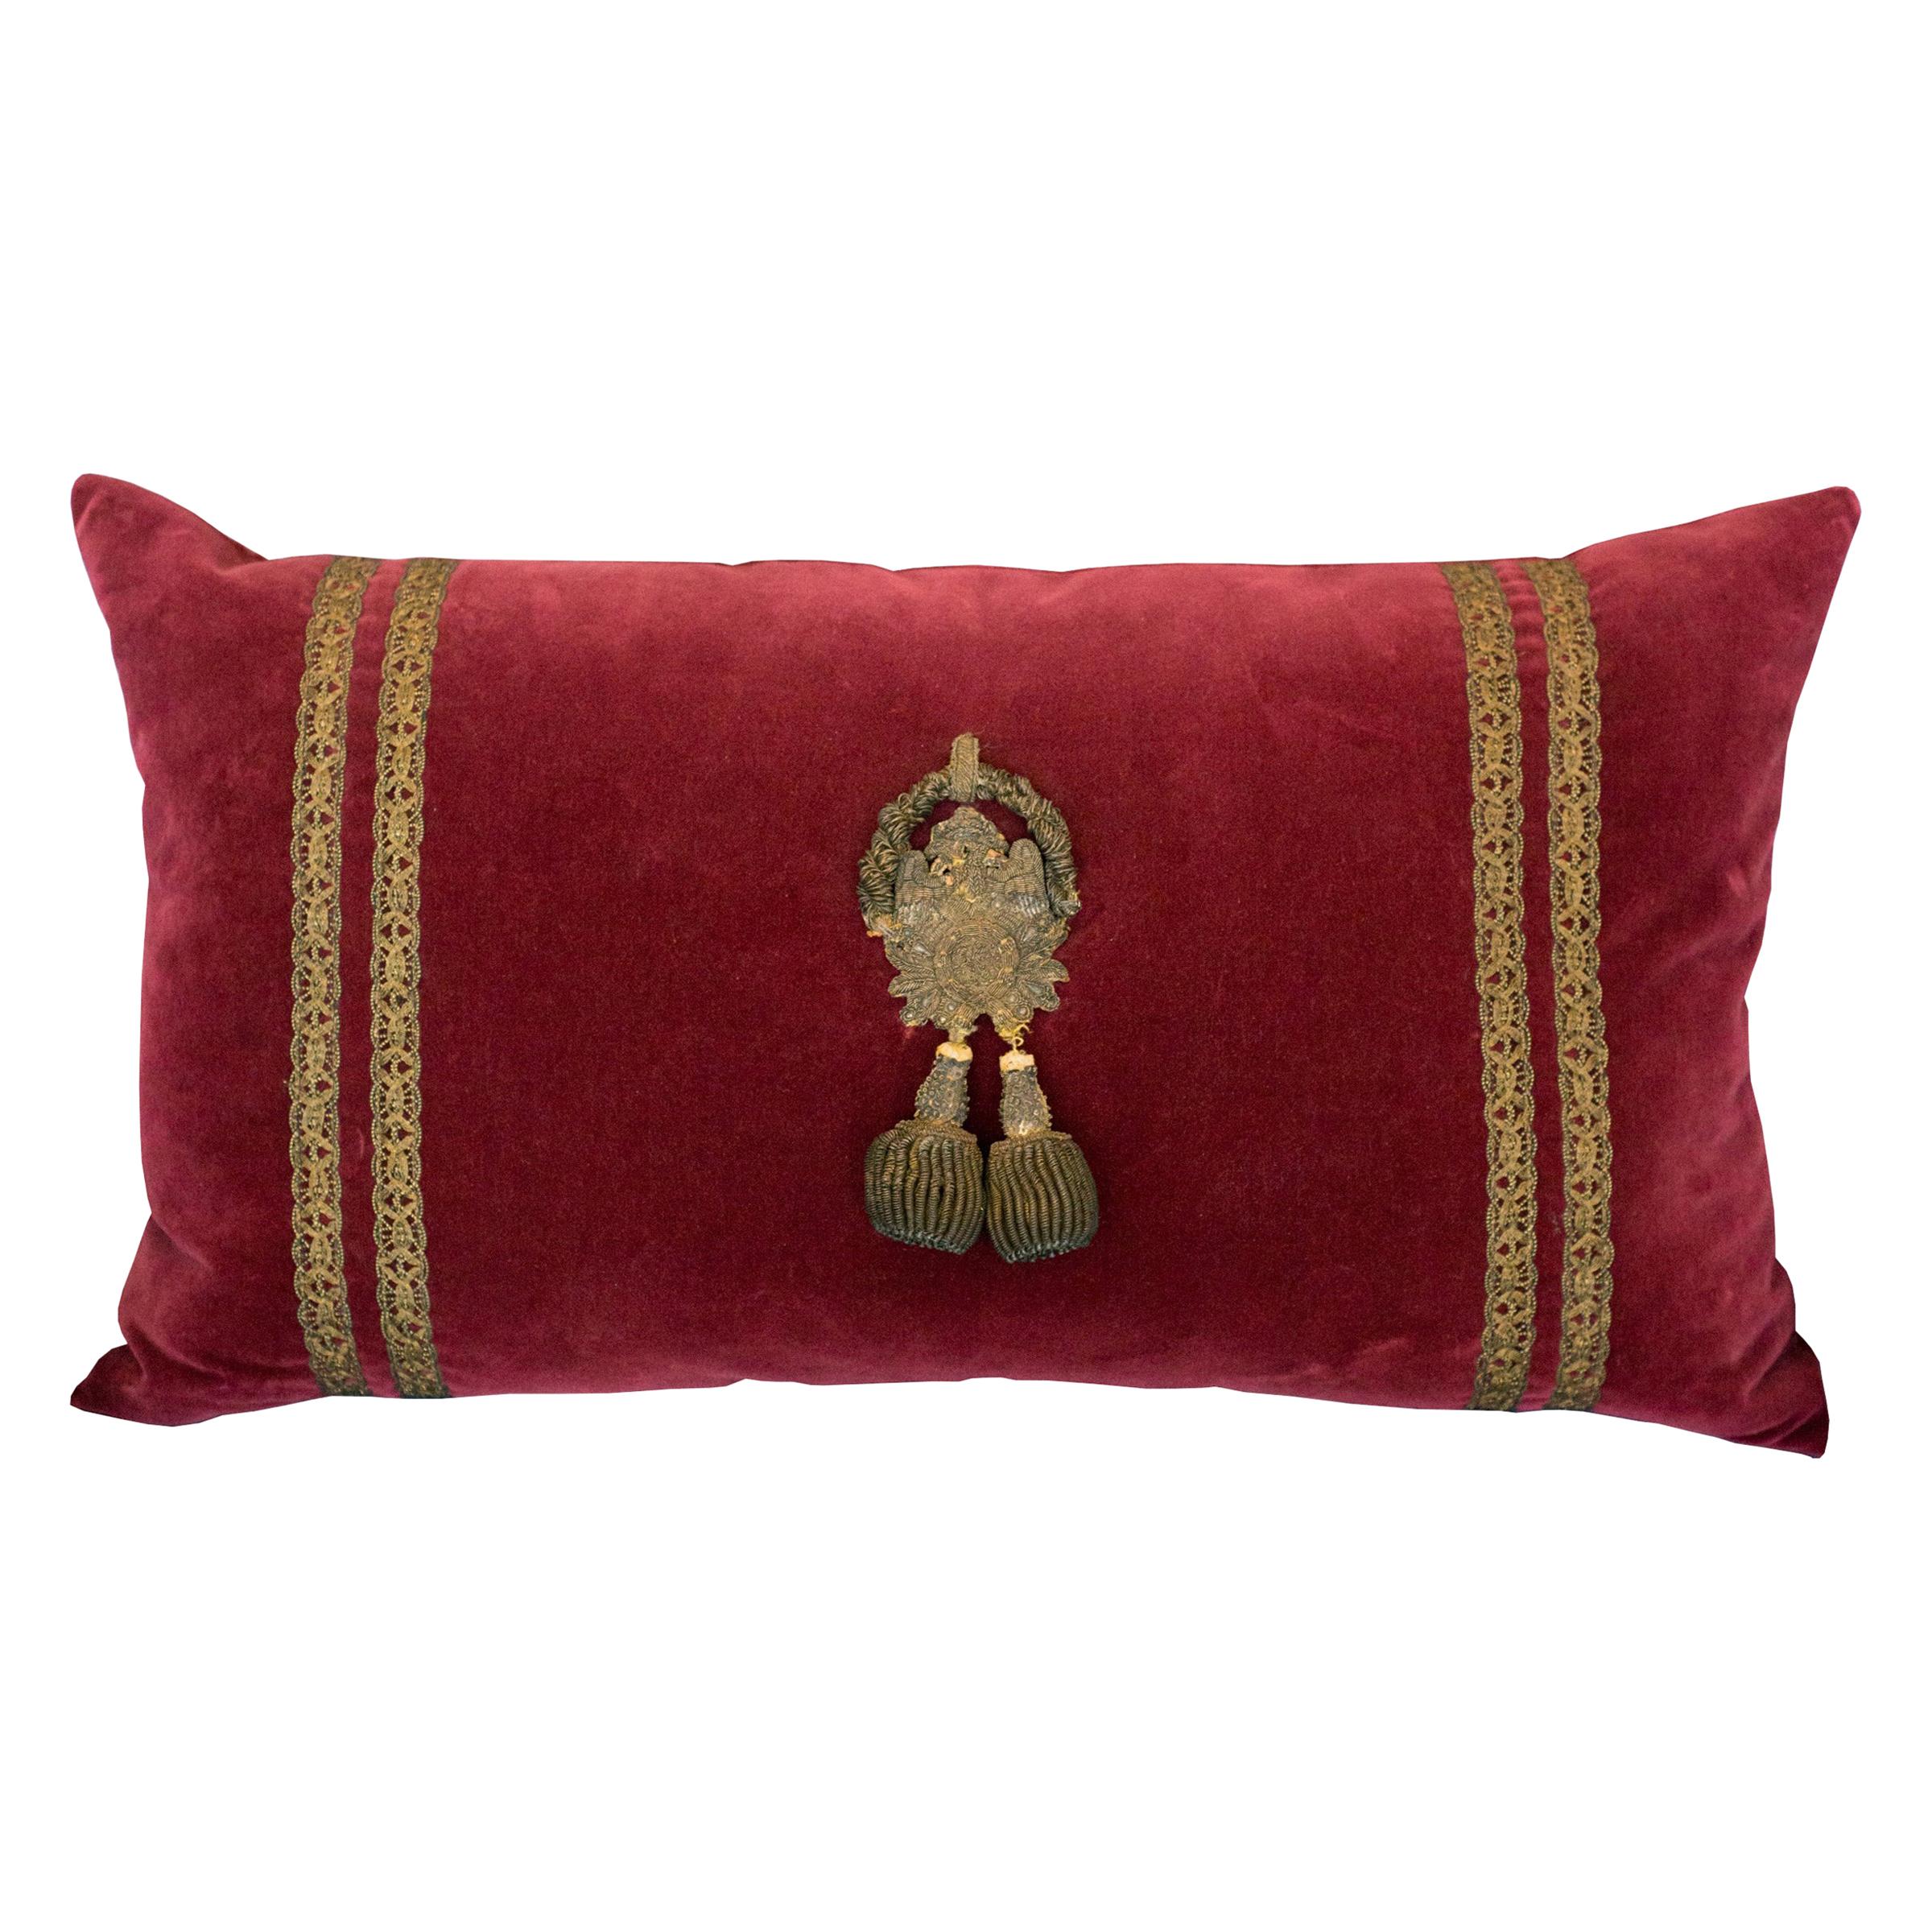 Large Burgundy Velvet Ottoman Pillow with Antique Metallic Trim & Tassels For Sale